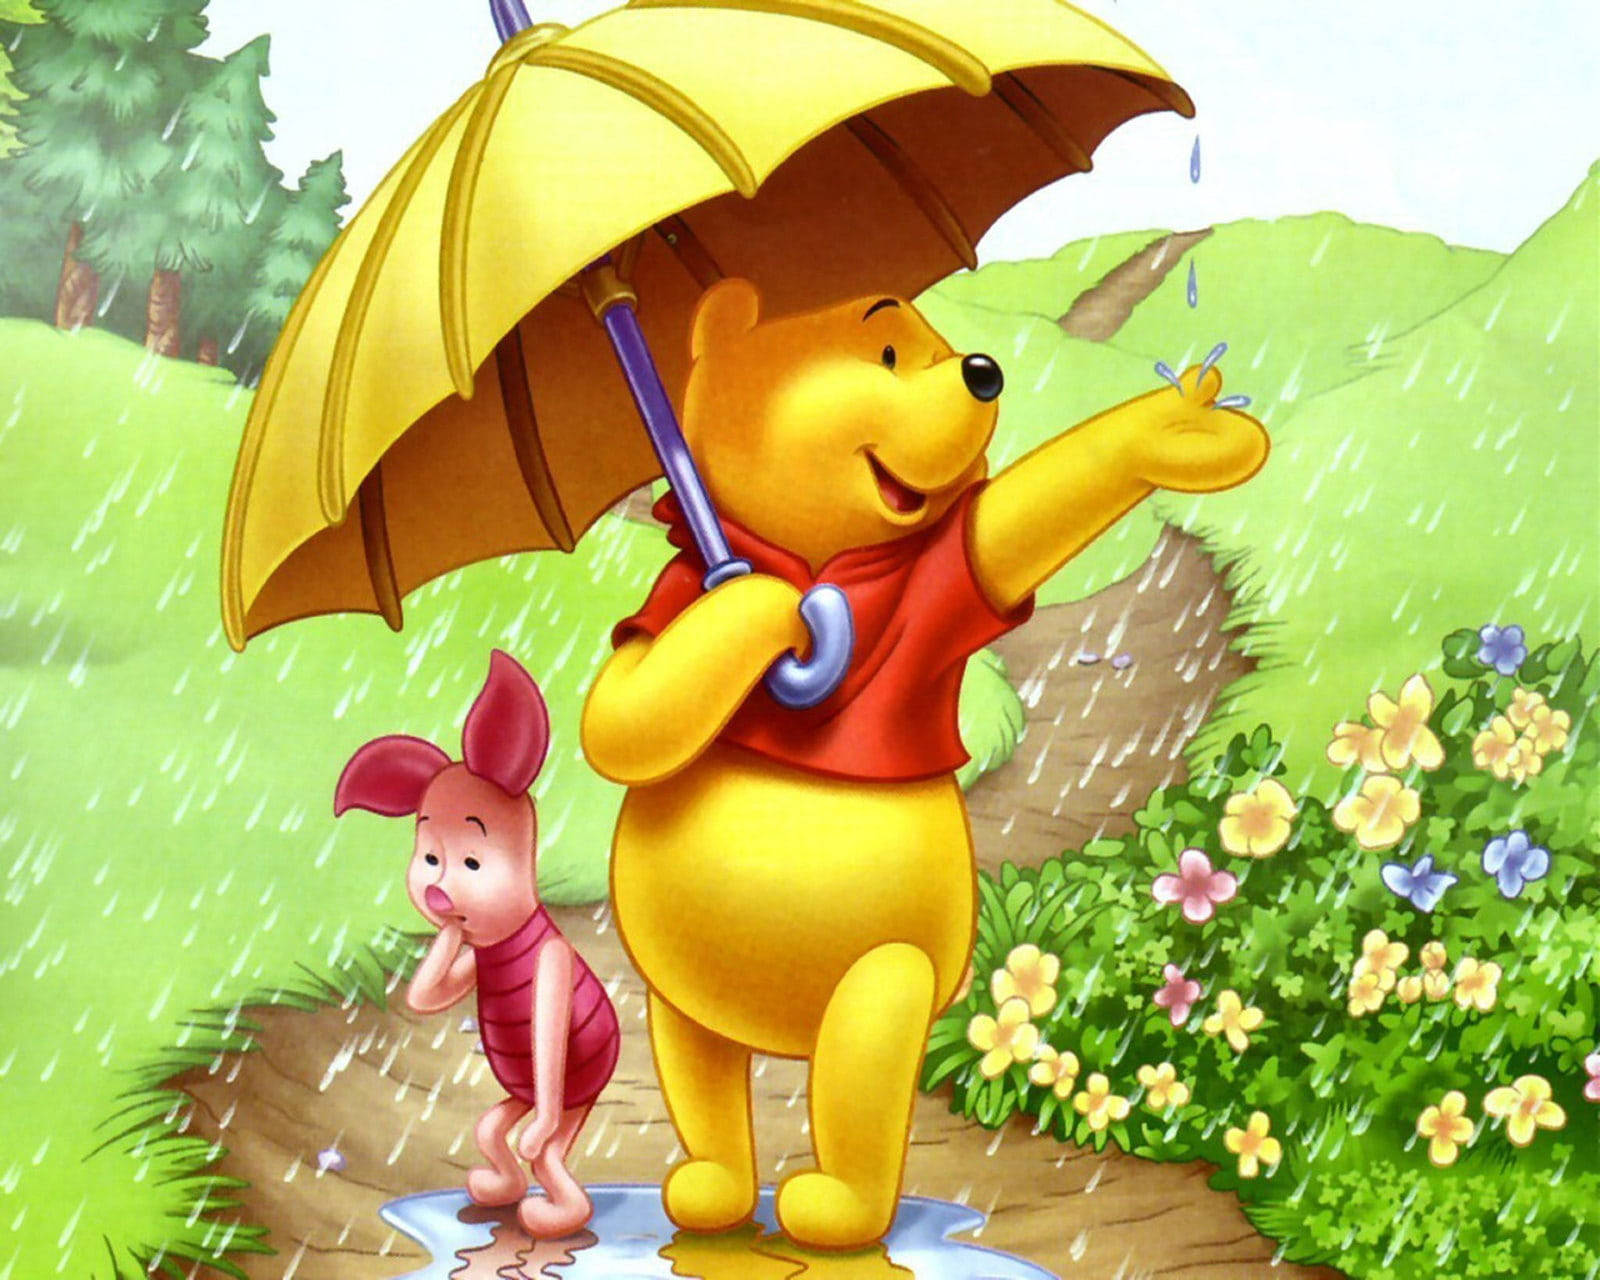 Cute Winnie The Pooh With Umbrella Wallpaper